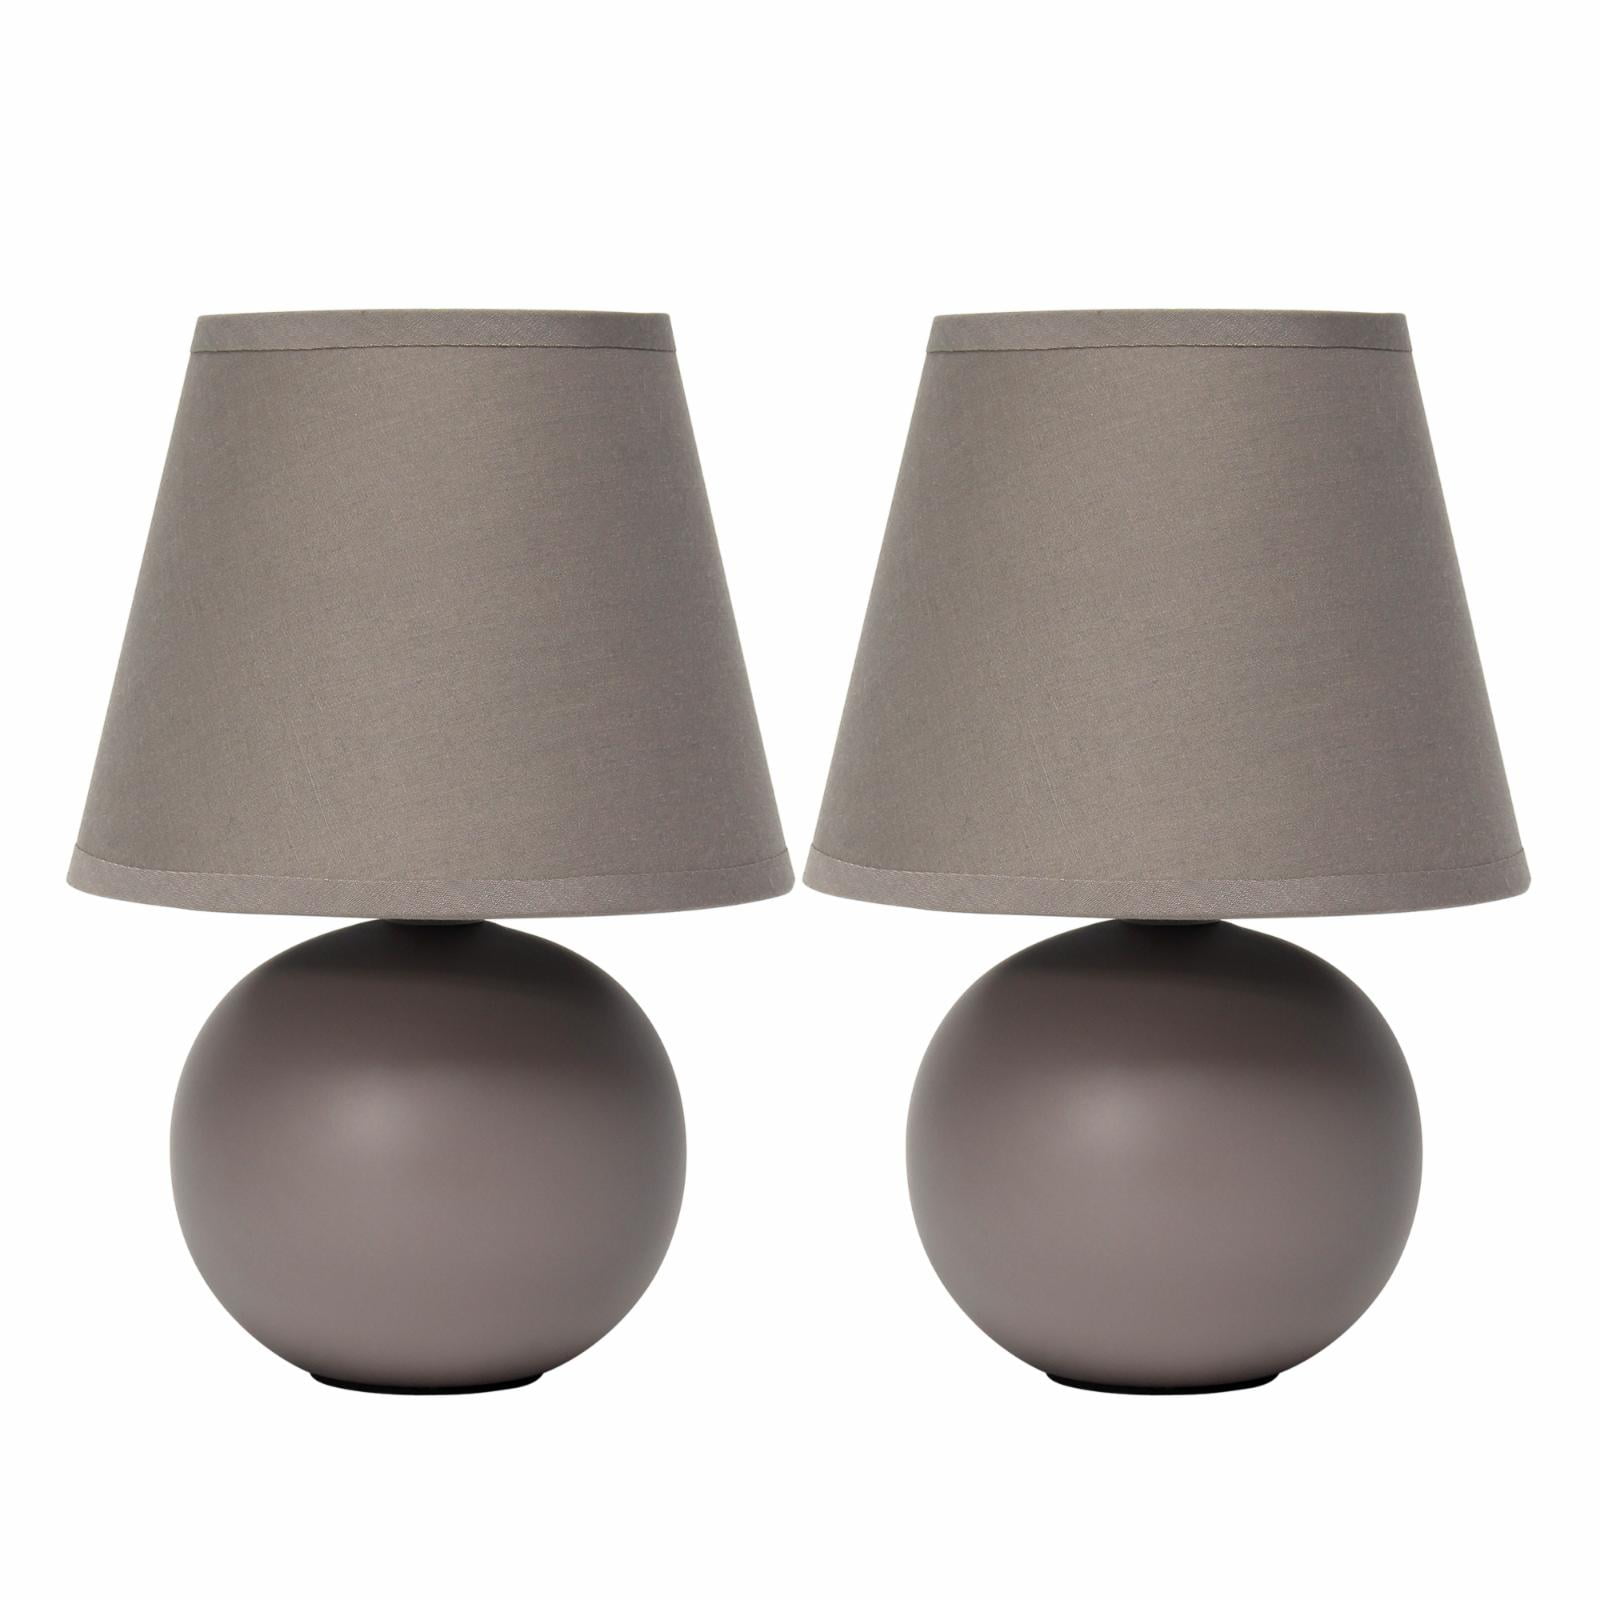 Lt2008-gry-2pk Mini Ceramic Globe Table Lamp, Gray - Pack Of 2